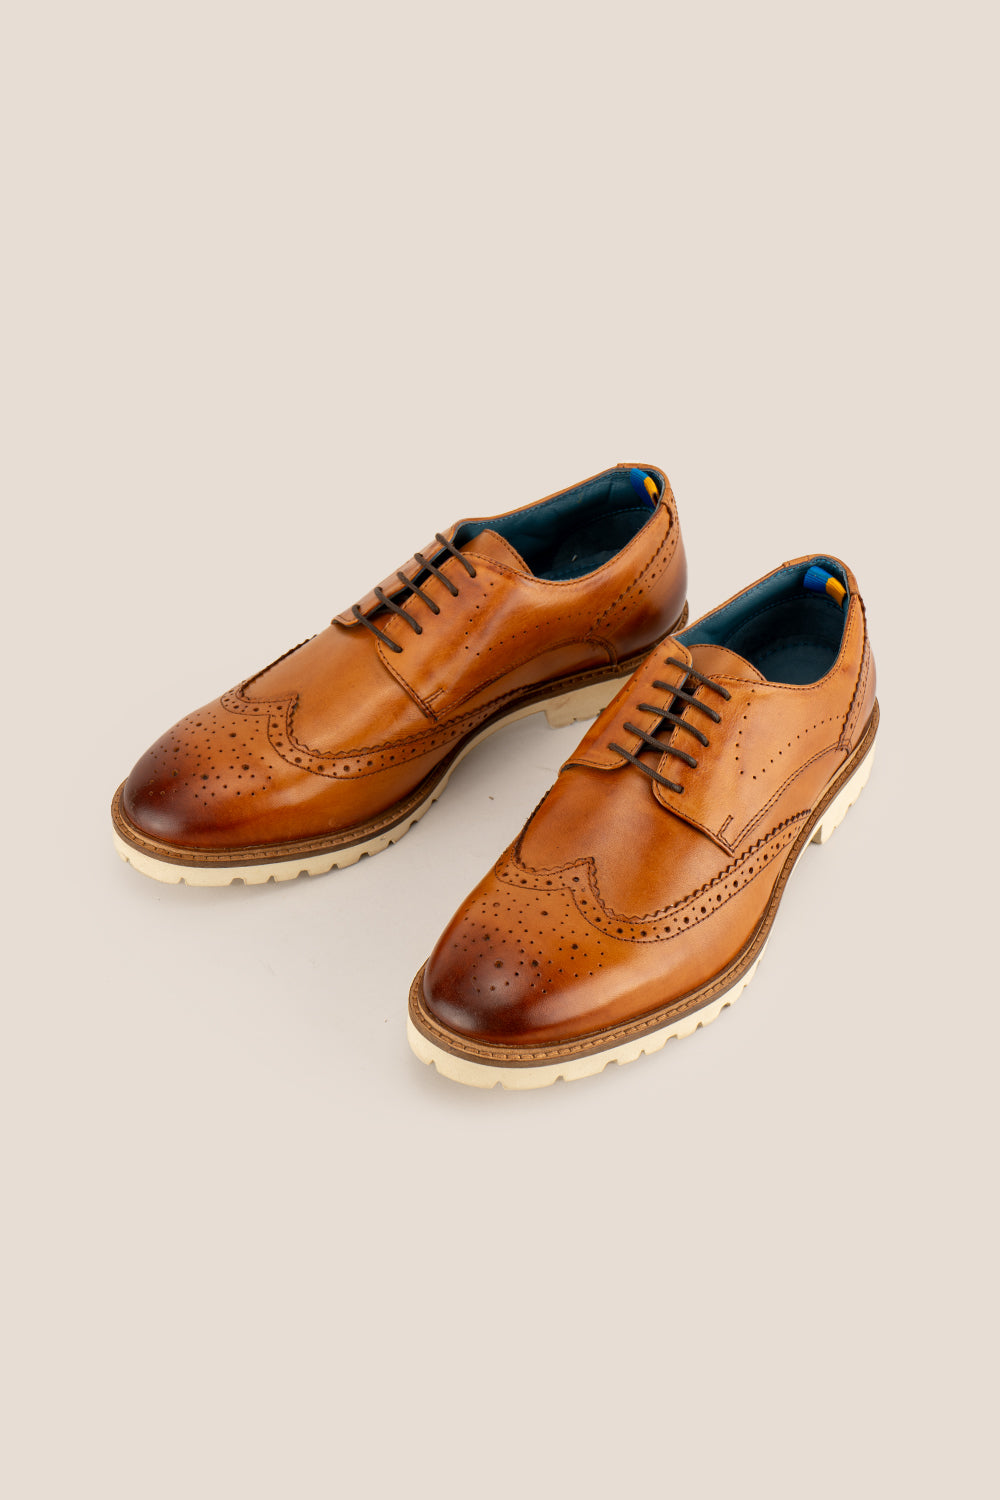 Eli tan derby brogue shoes for men | Oswin Hyde